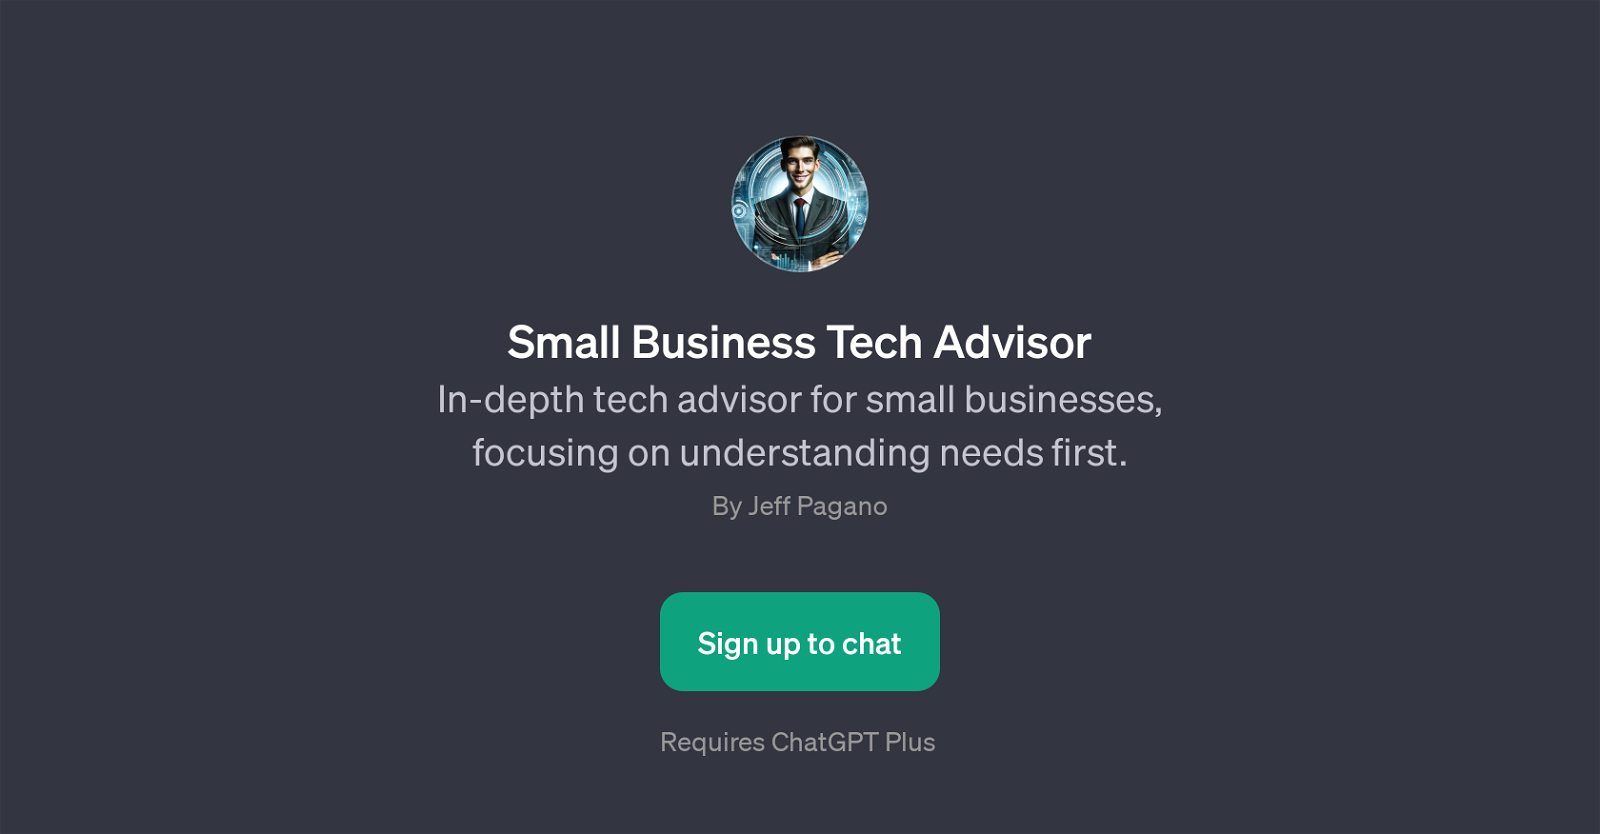 Small Business Tech Advisor website